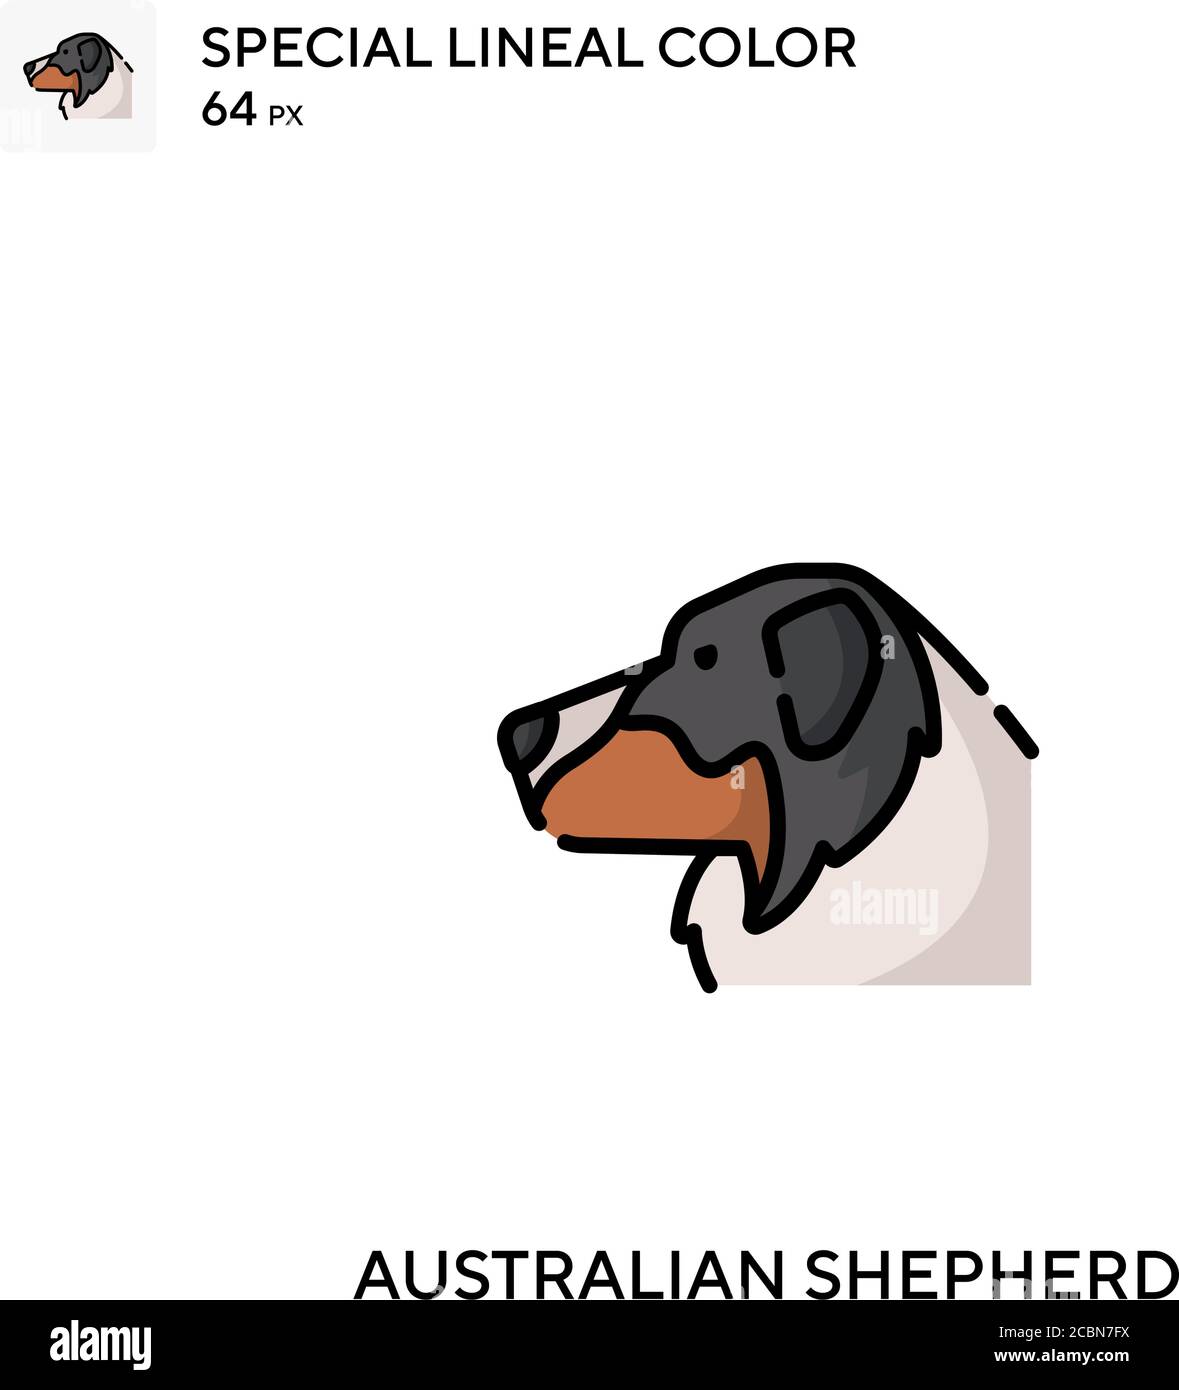 Australian Shepherd Special Lineal Farbe Vektor-Symbol. Australian Shepherd Icons für Ihr Business-Projekt Stock Vektor